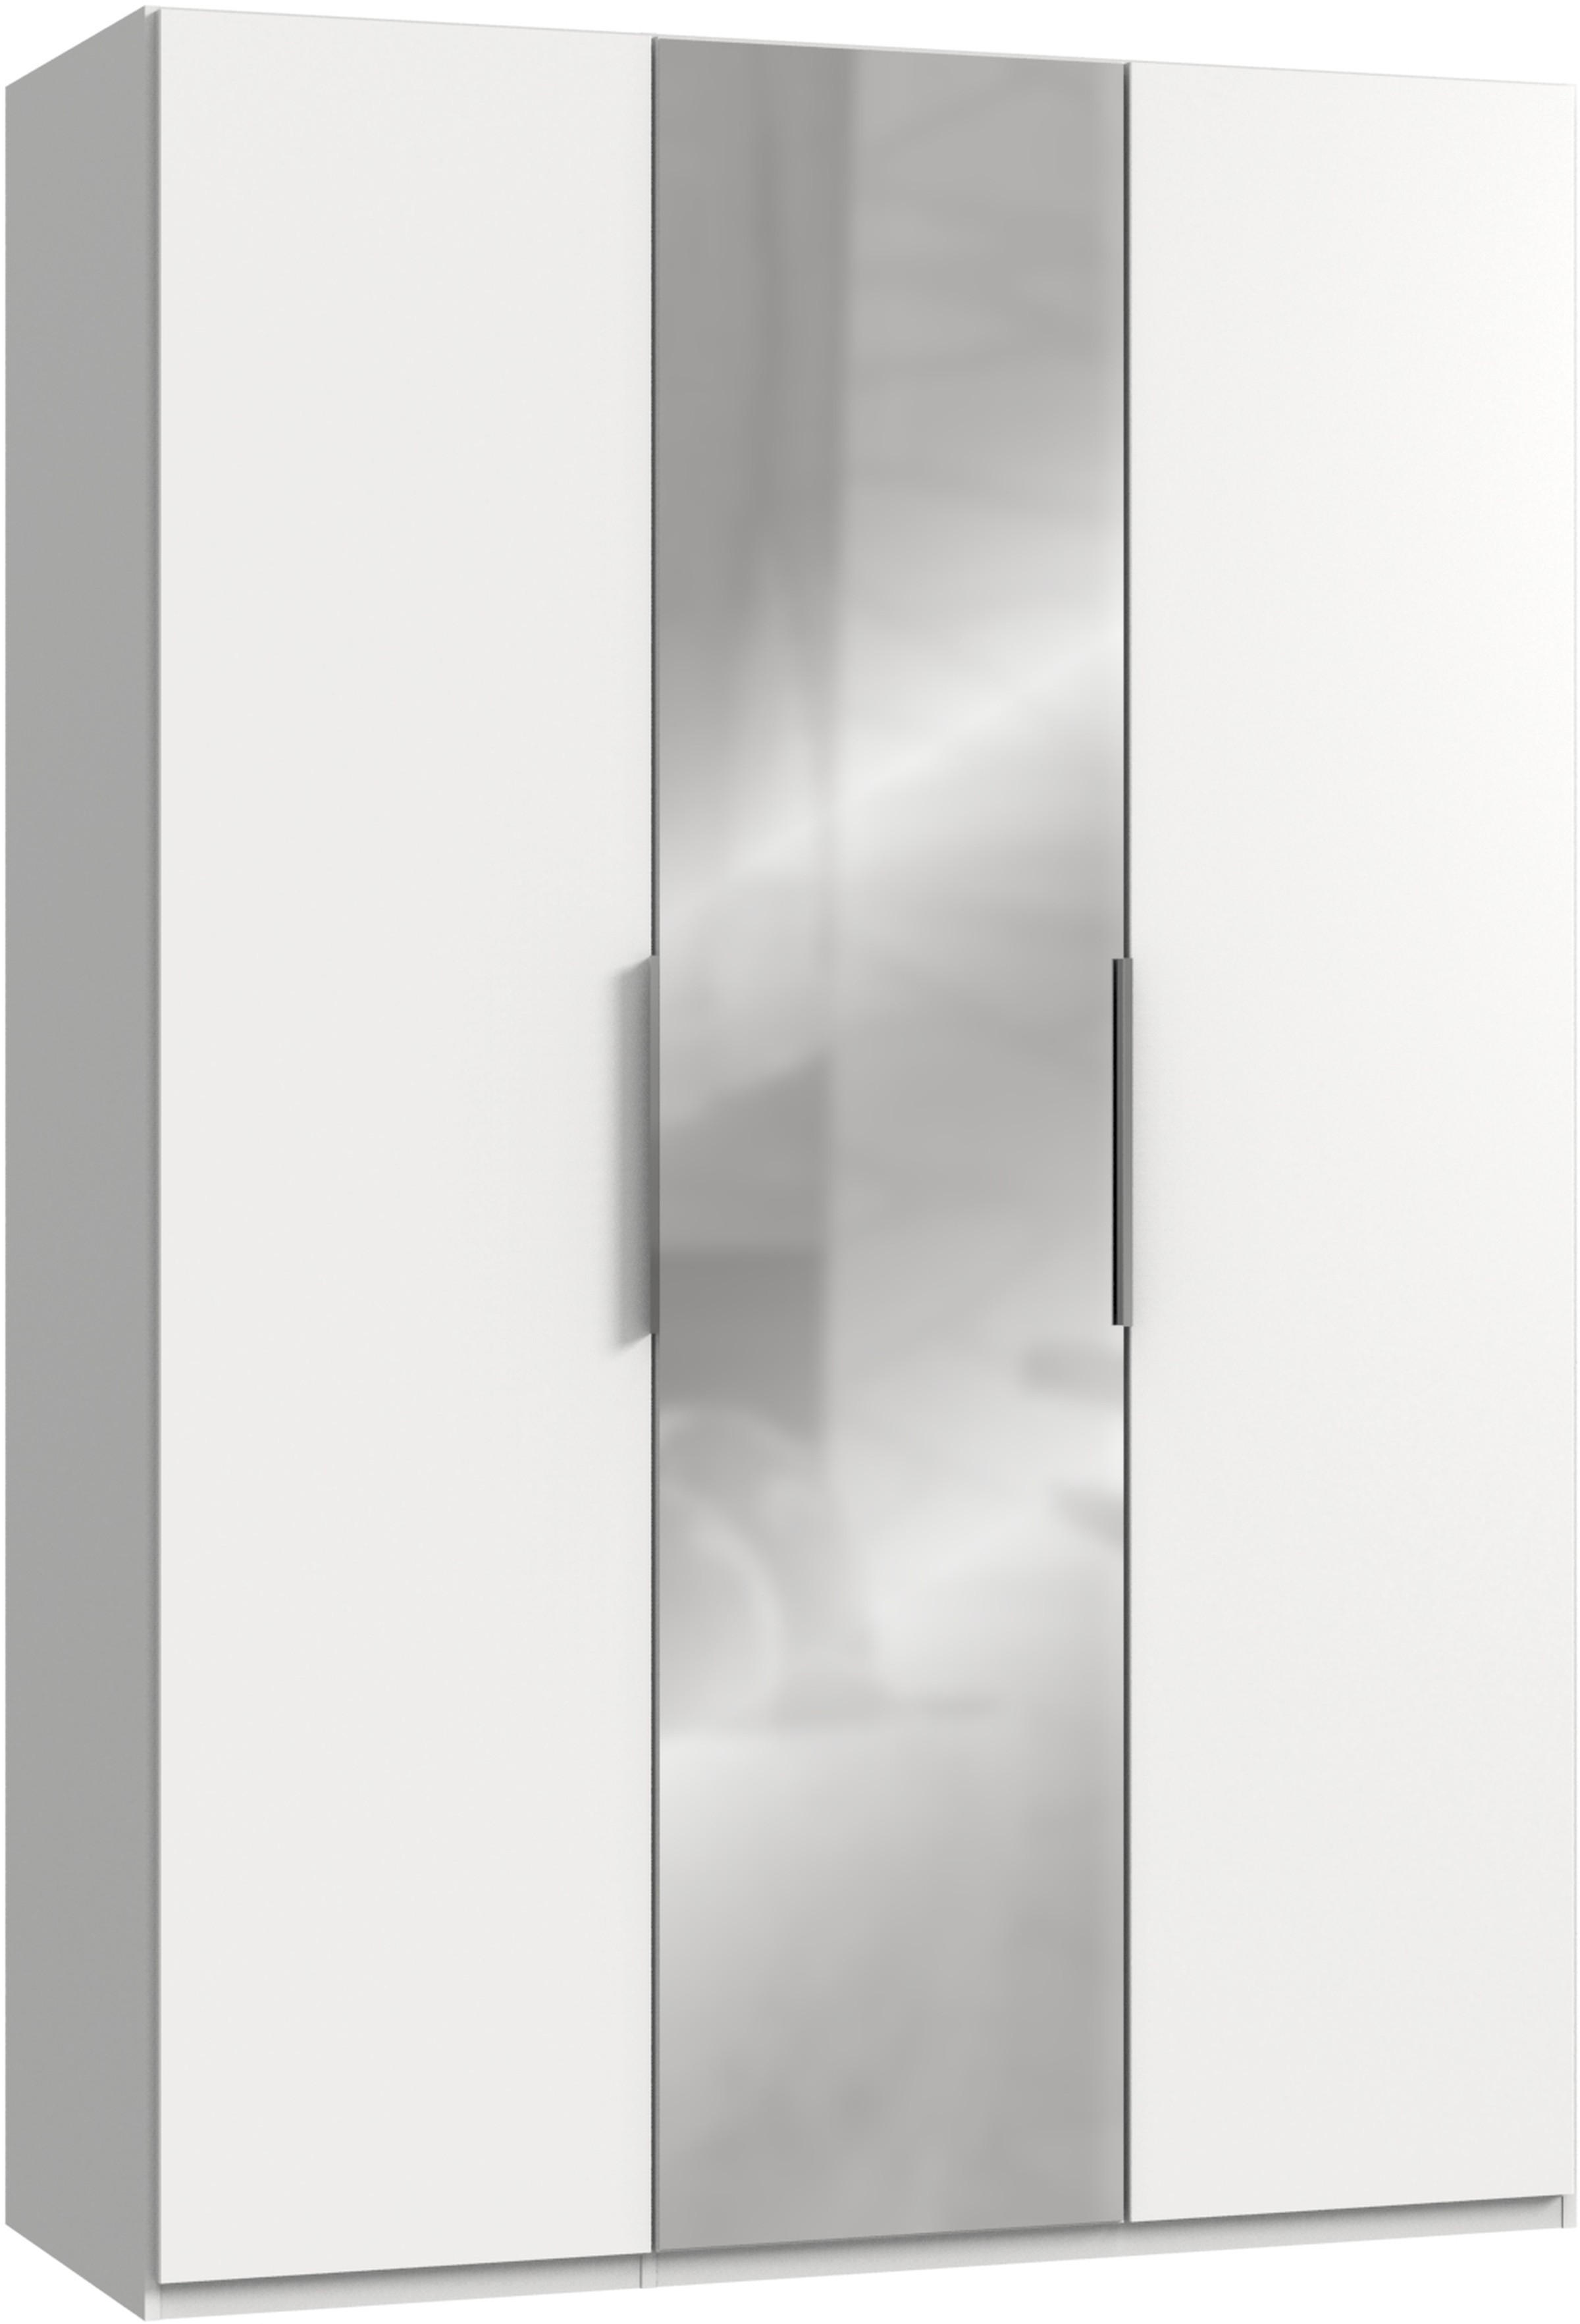 DREHTÜRENSCHRANK 3-türig Grau, Weiß  - Chromfarben/Weiß, MODERN, Holzwerkstoff (150/216/58cm) - MID.YOU